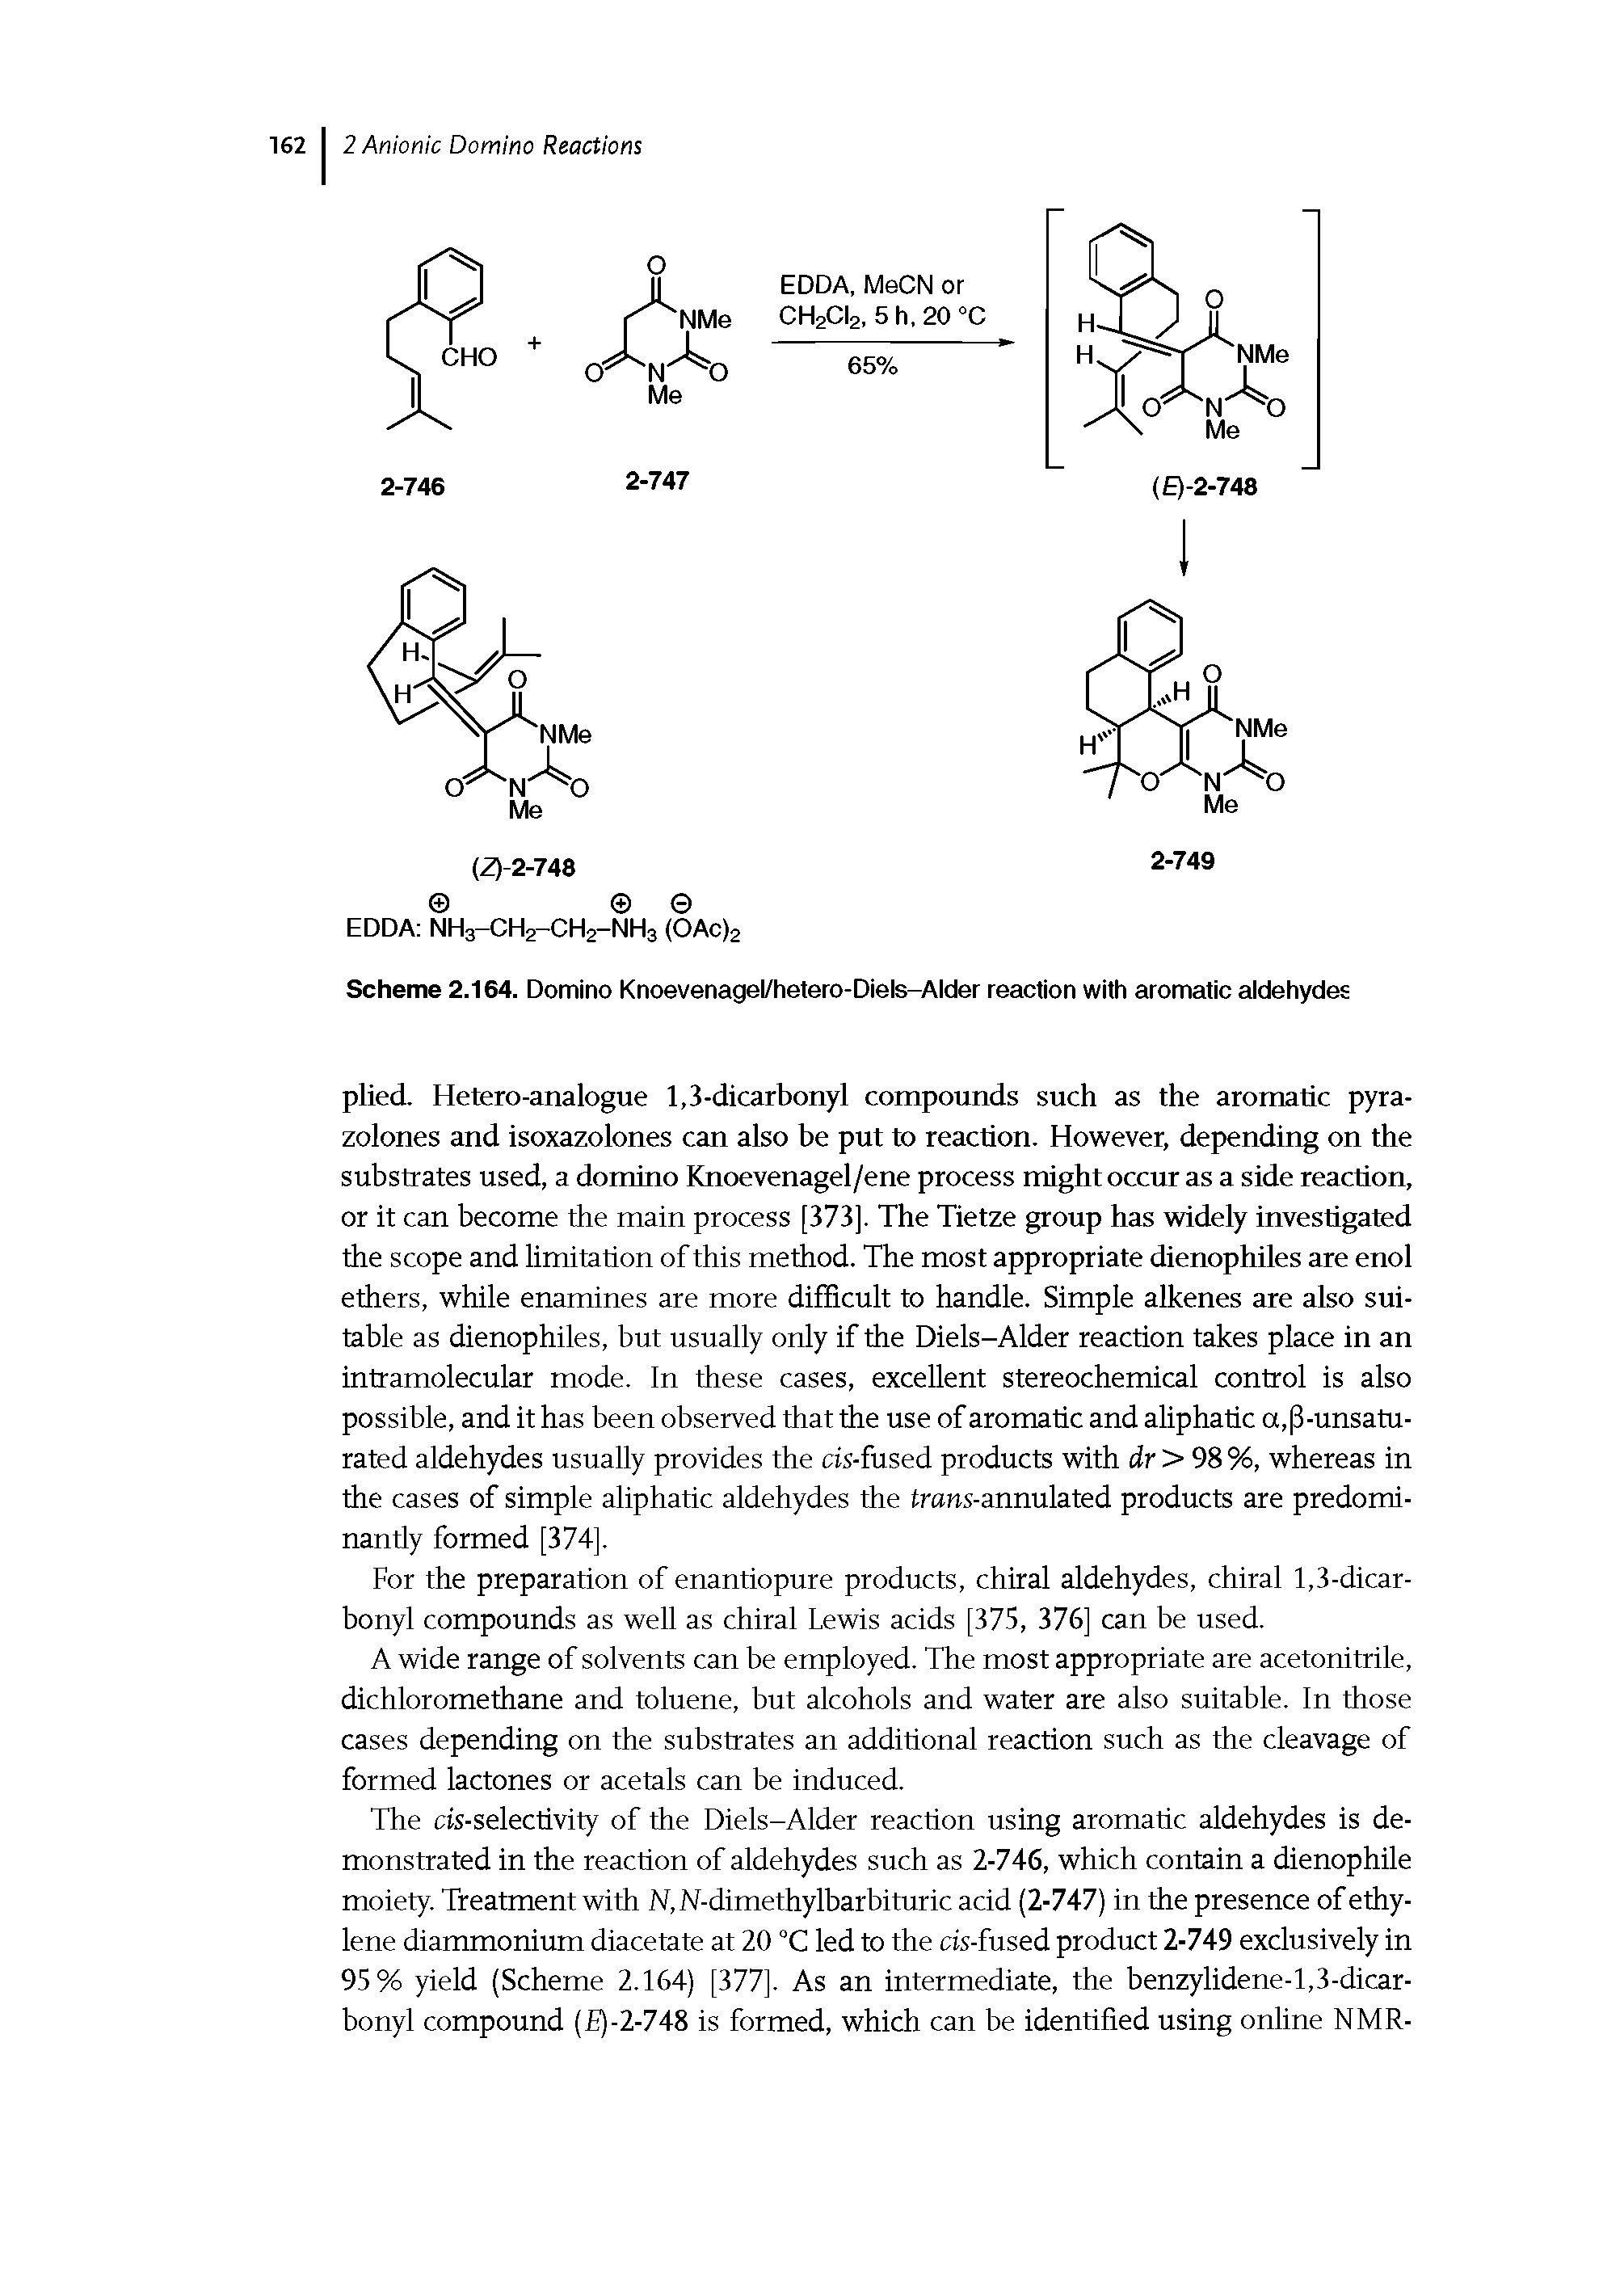 Scheme 2.164. Domino Knoevenagel/hetero-Diels-Alder reaction with aromatic aldehydes...